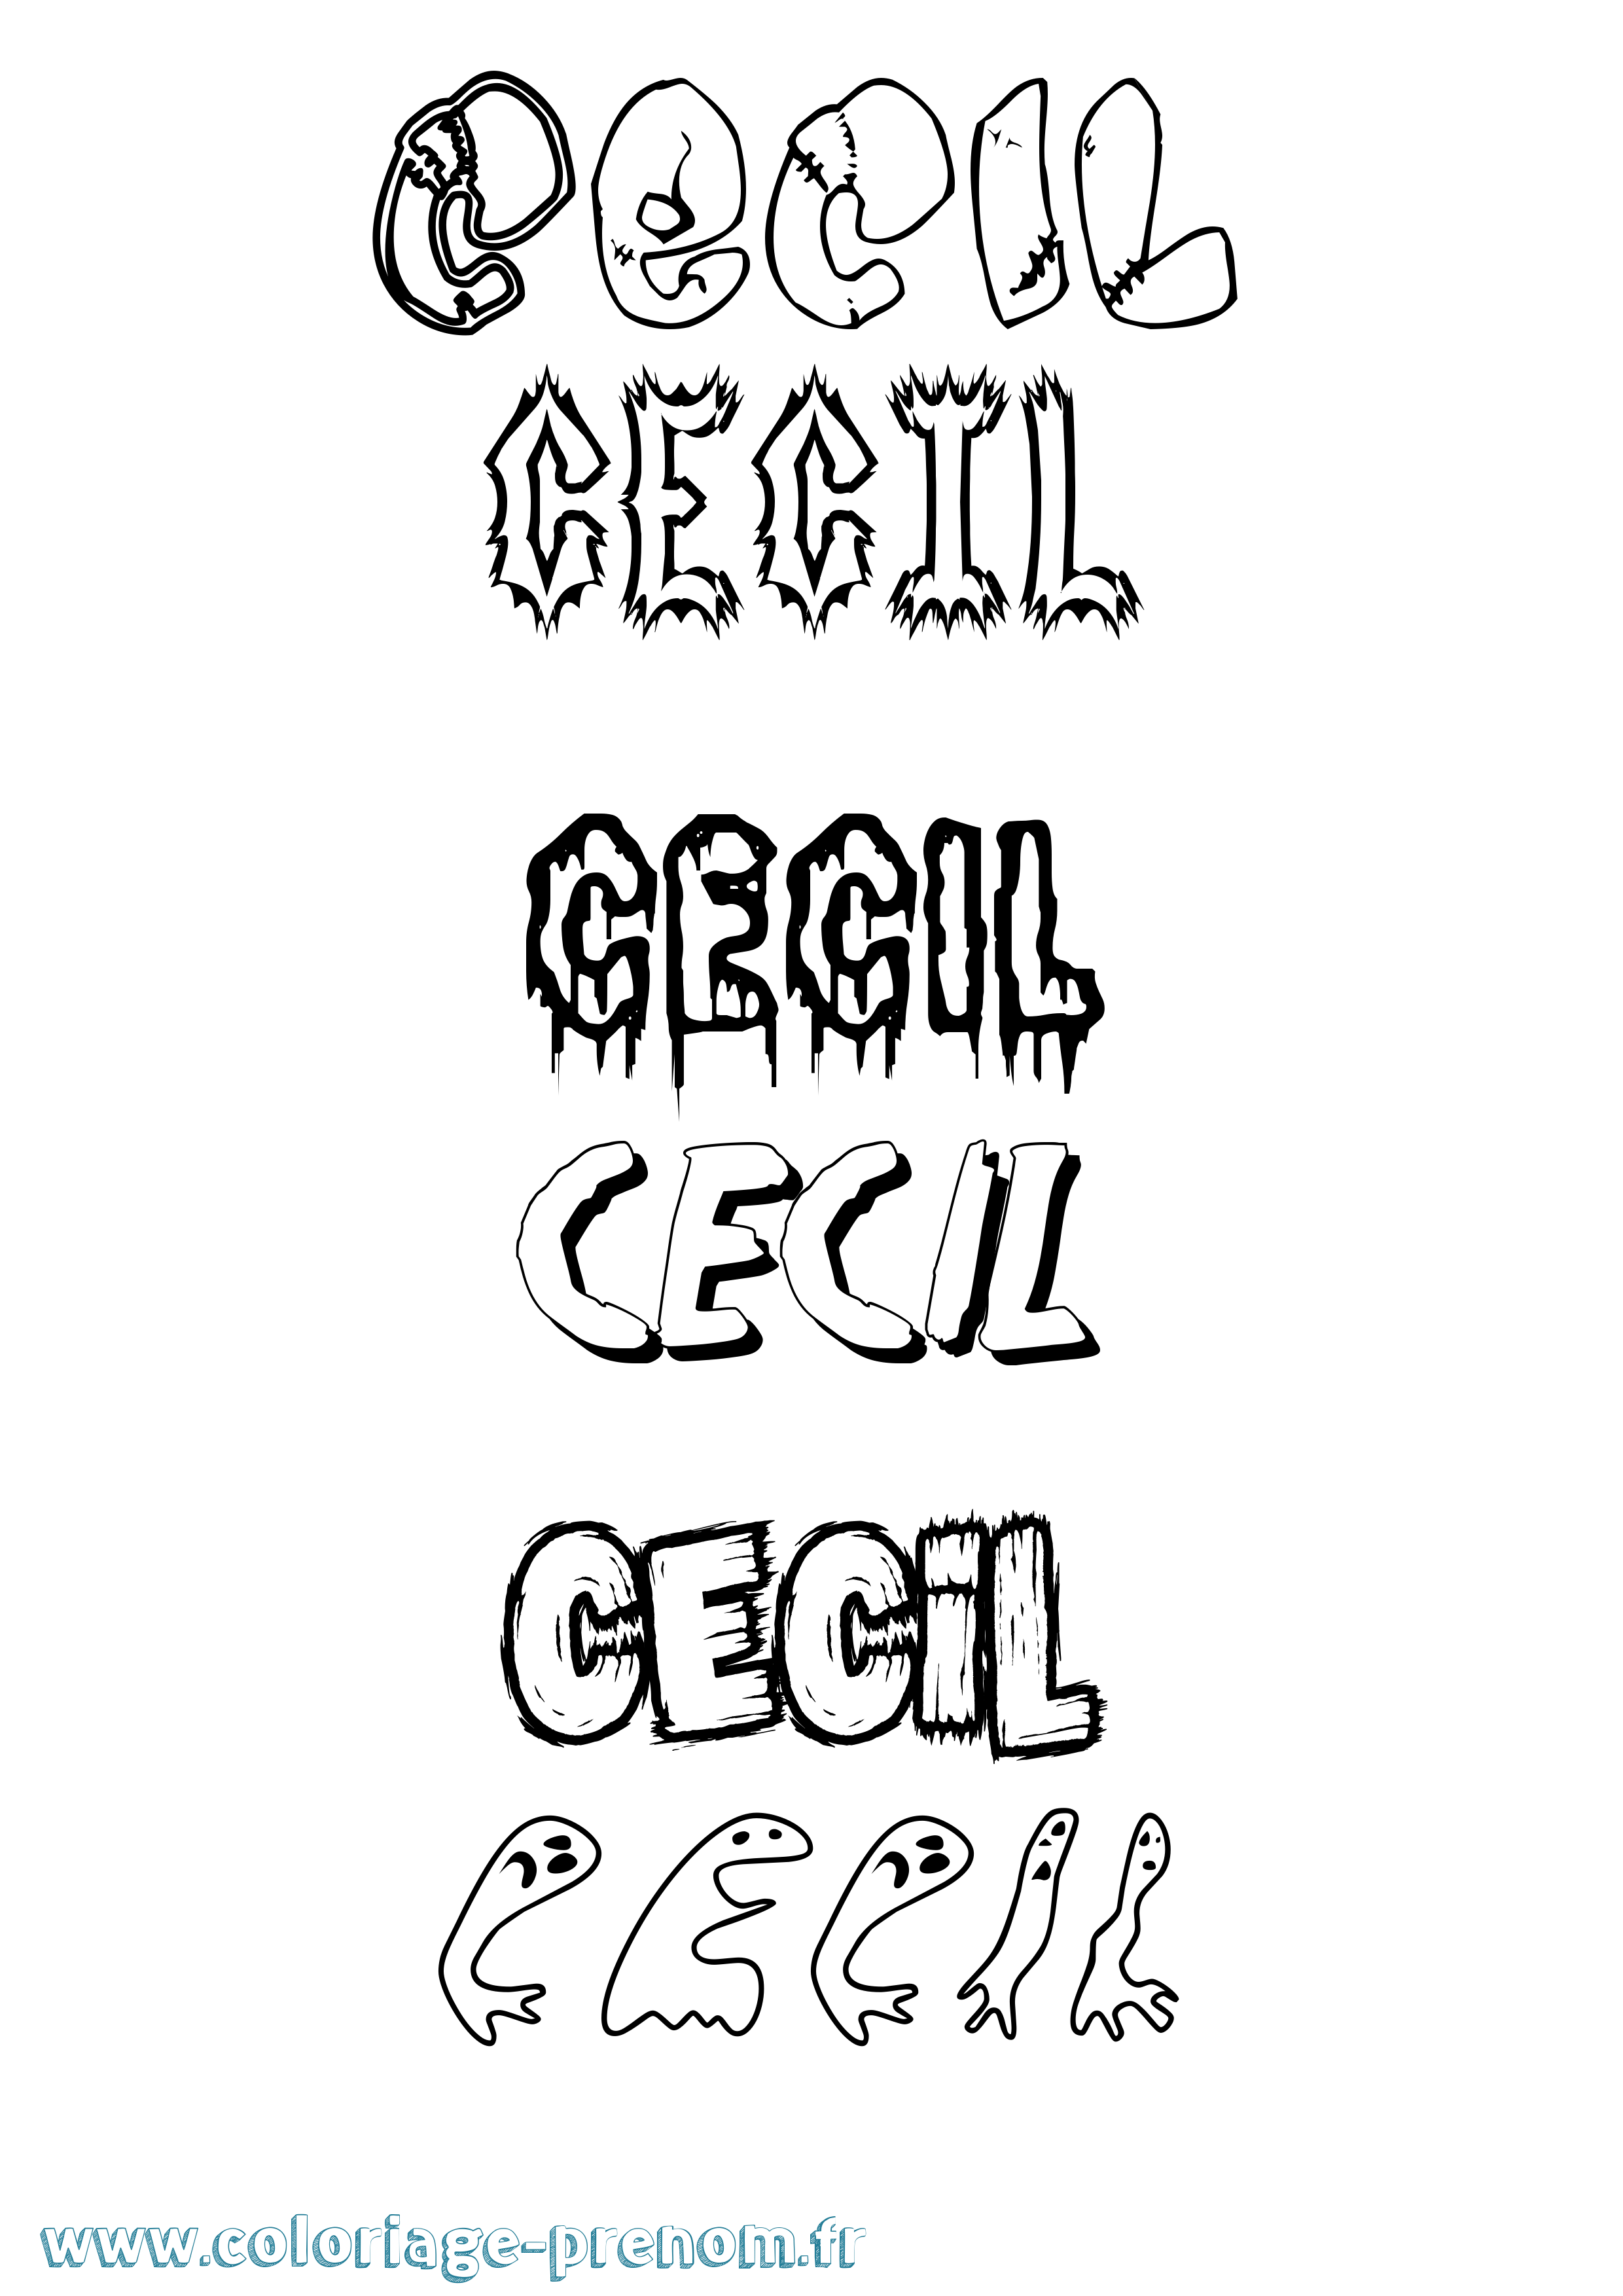 Coloriage prénom Cecil Frisson